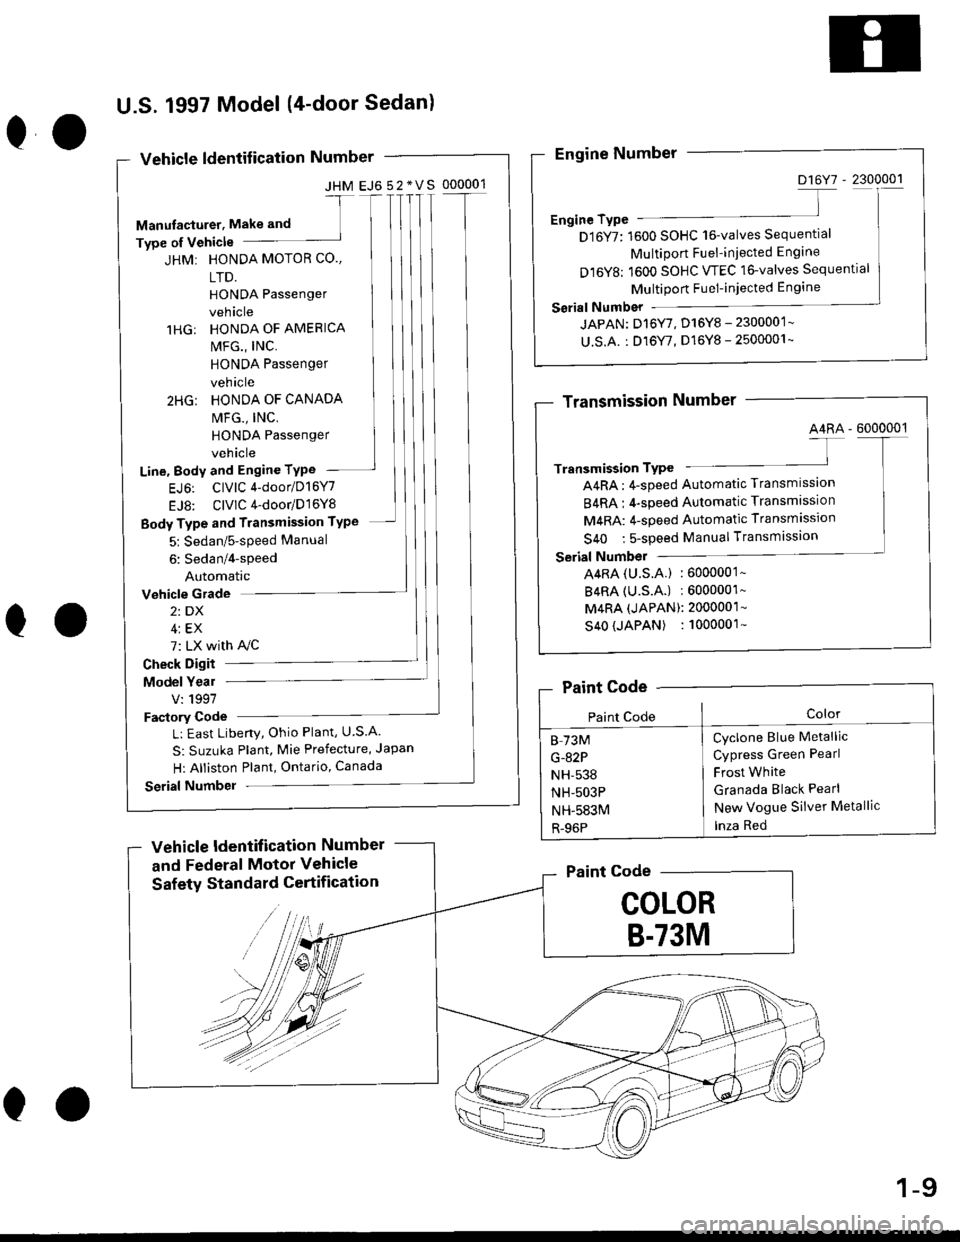 HONDA CIVIC 1997 6.G User Guide 00
U.S. 1997 Model (4-door Sedanl
Vehicle ldentif ication Number
JHM EJ6 52*VS 000001
Manulaqturer. Make and 
-t
Type of Vehicle
HONDA MOTOR CO.,
LTD.
HONDA Passenger
vehicle
HONDA OF AMERICA
MFG., IN